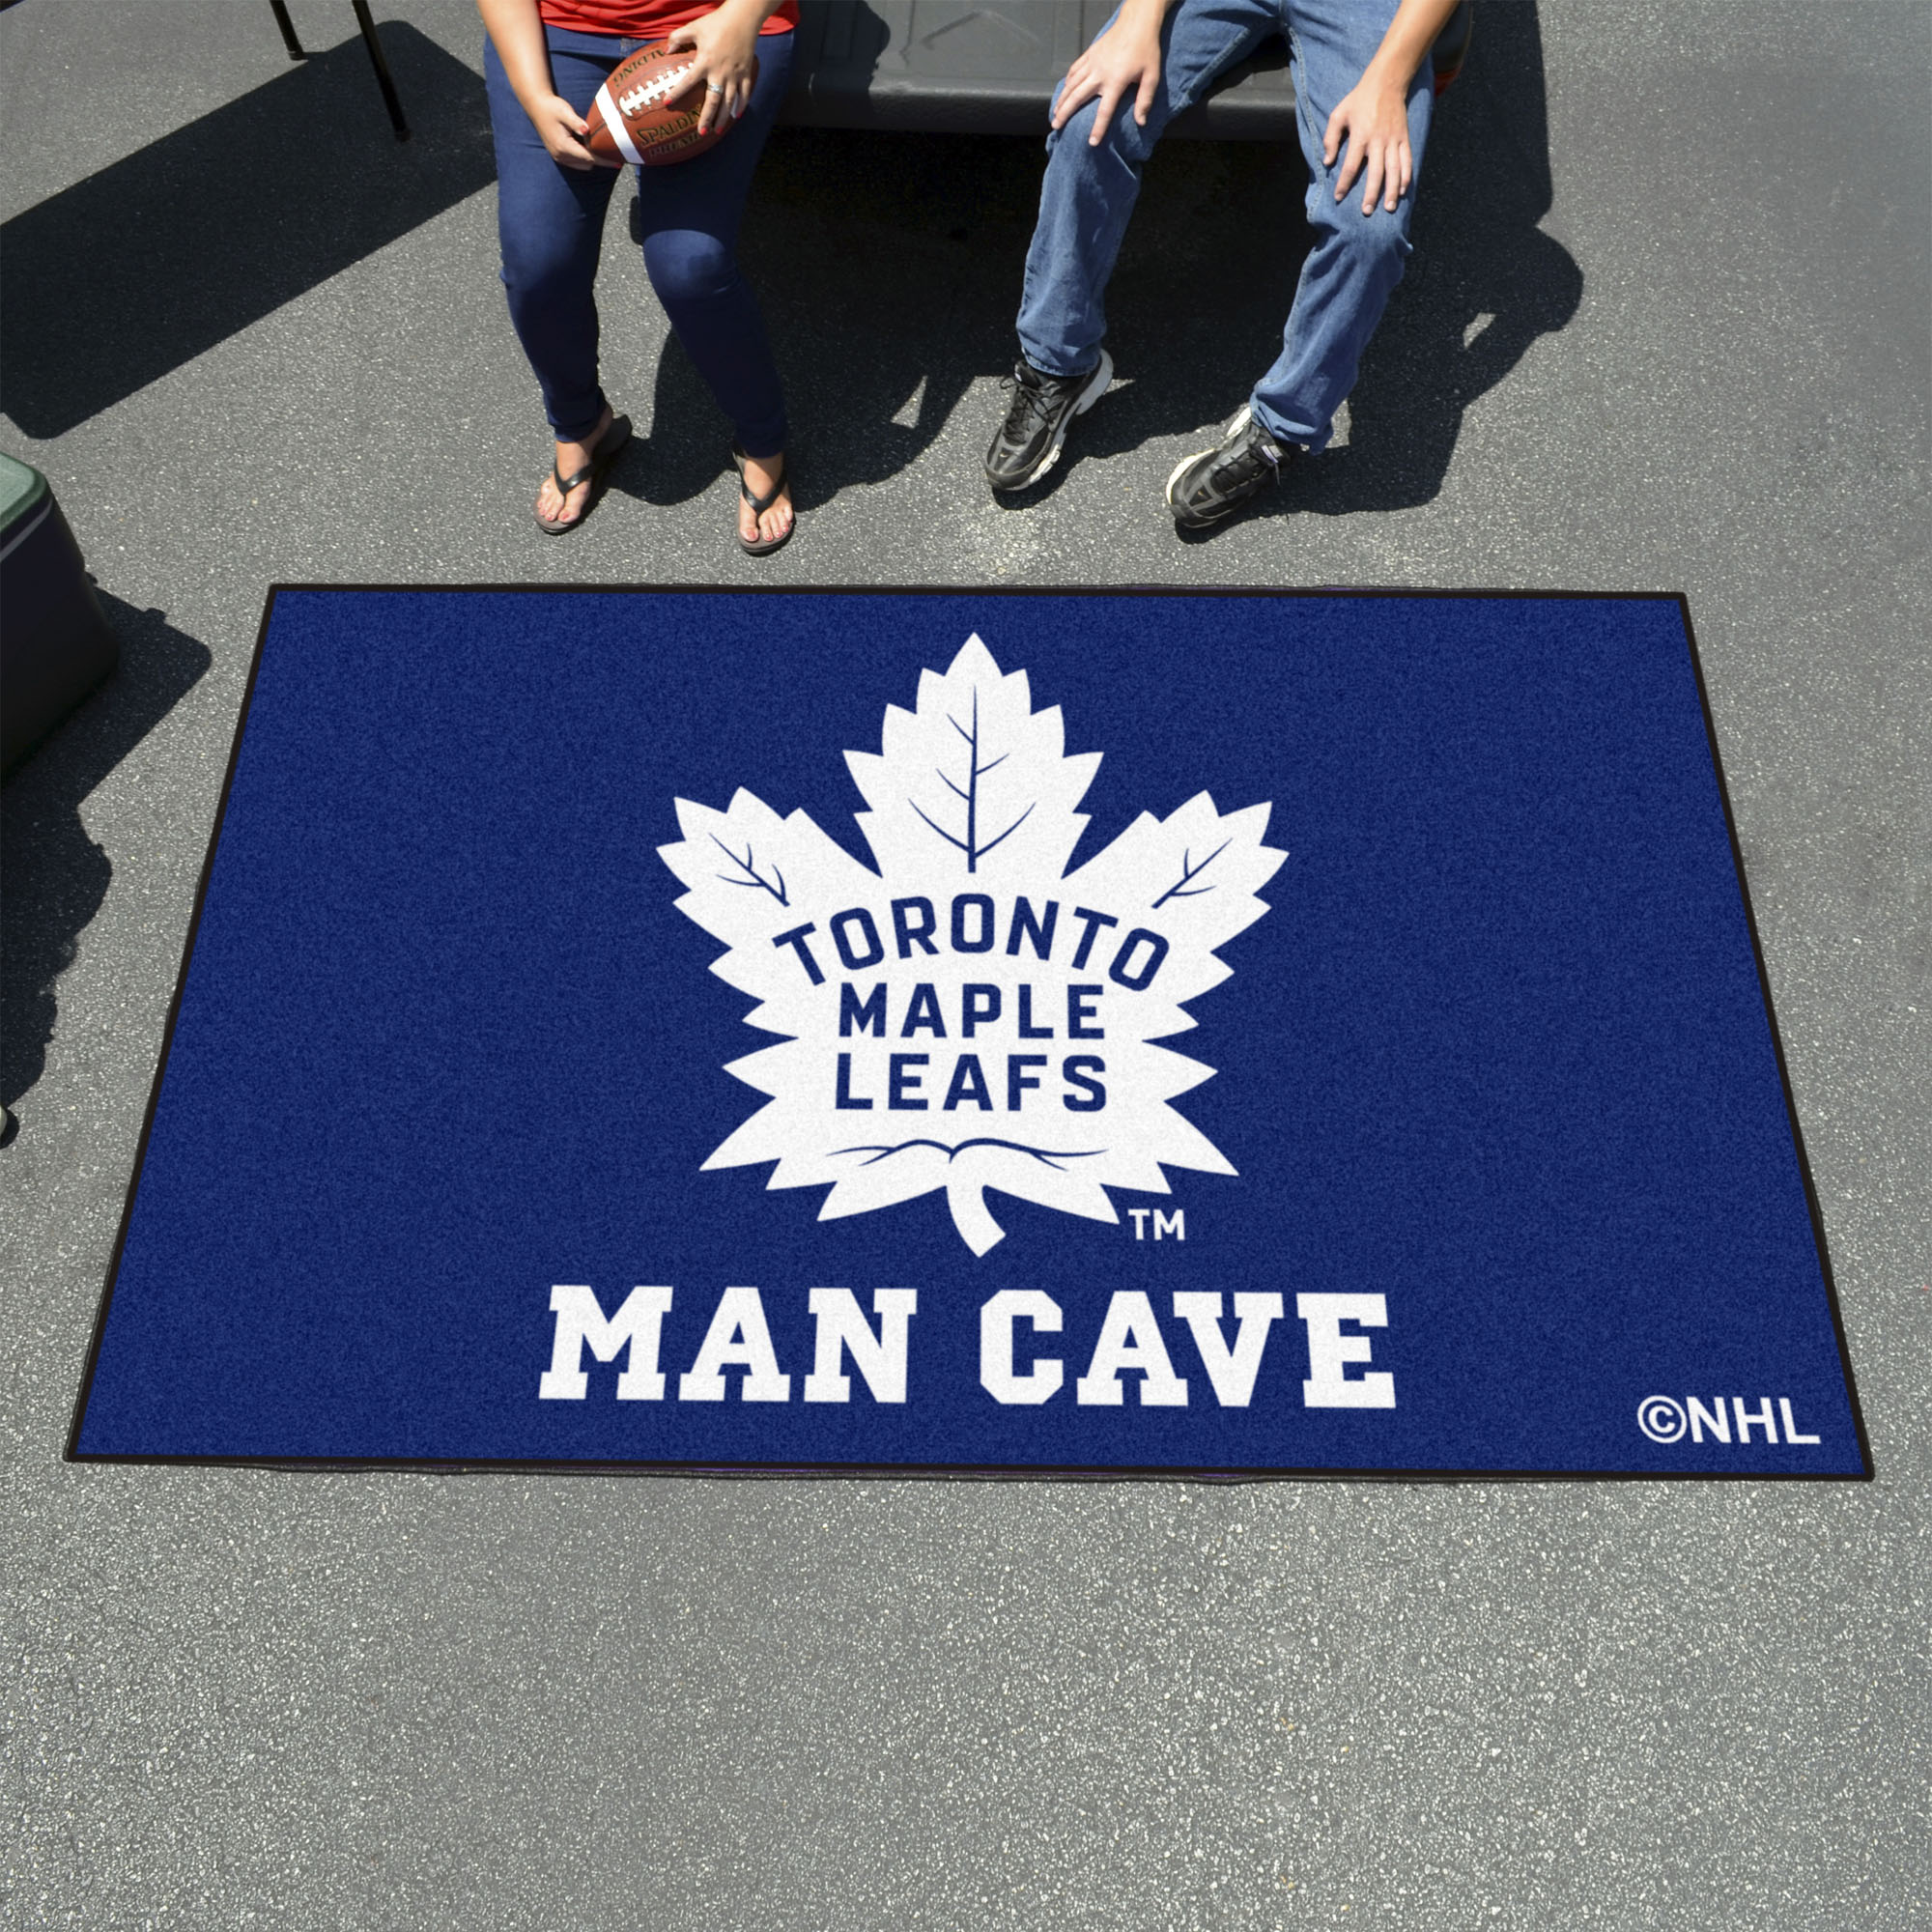 Toronto Maple Leafs UTILI-MAT 60 x 96 MAN CAVE Rug